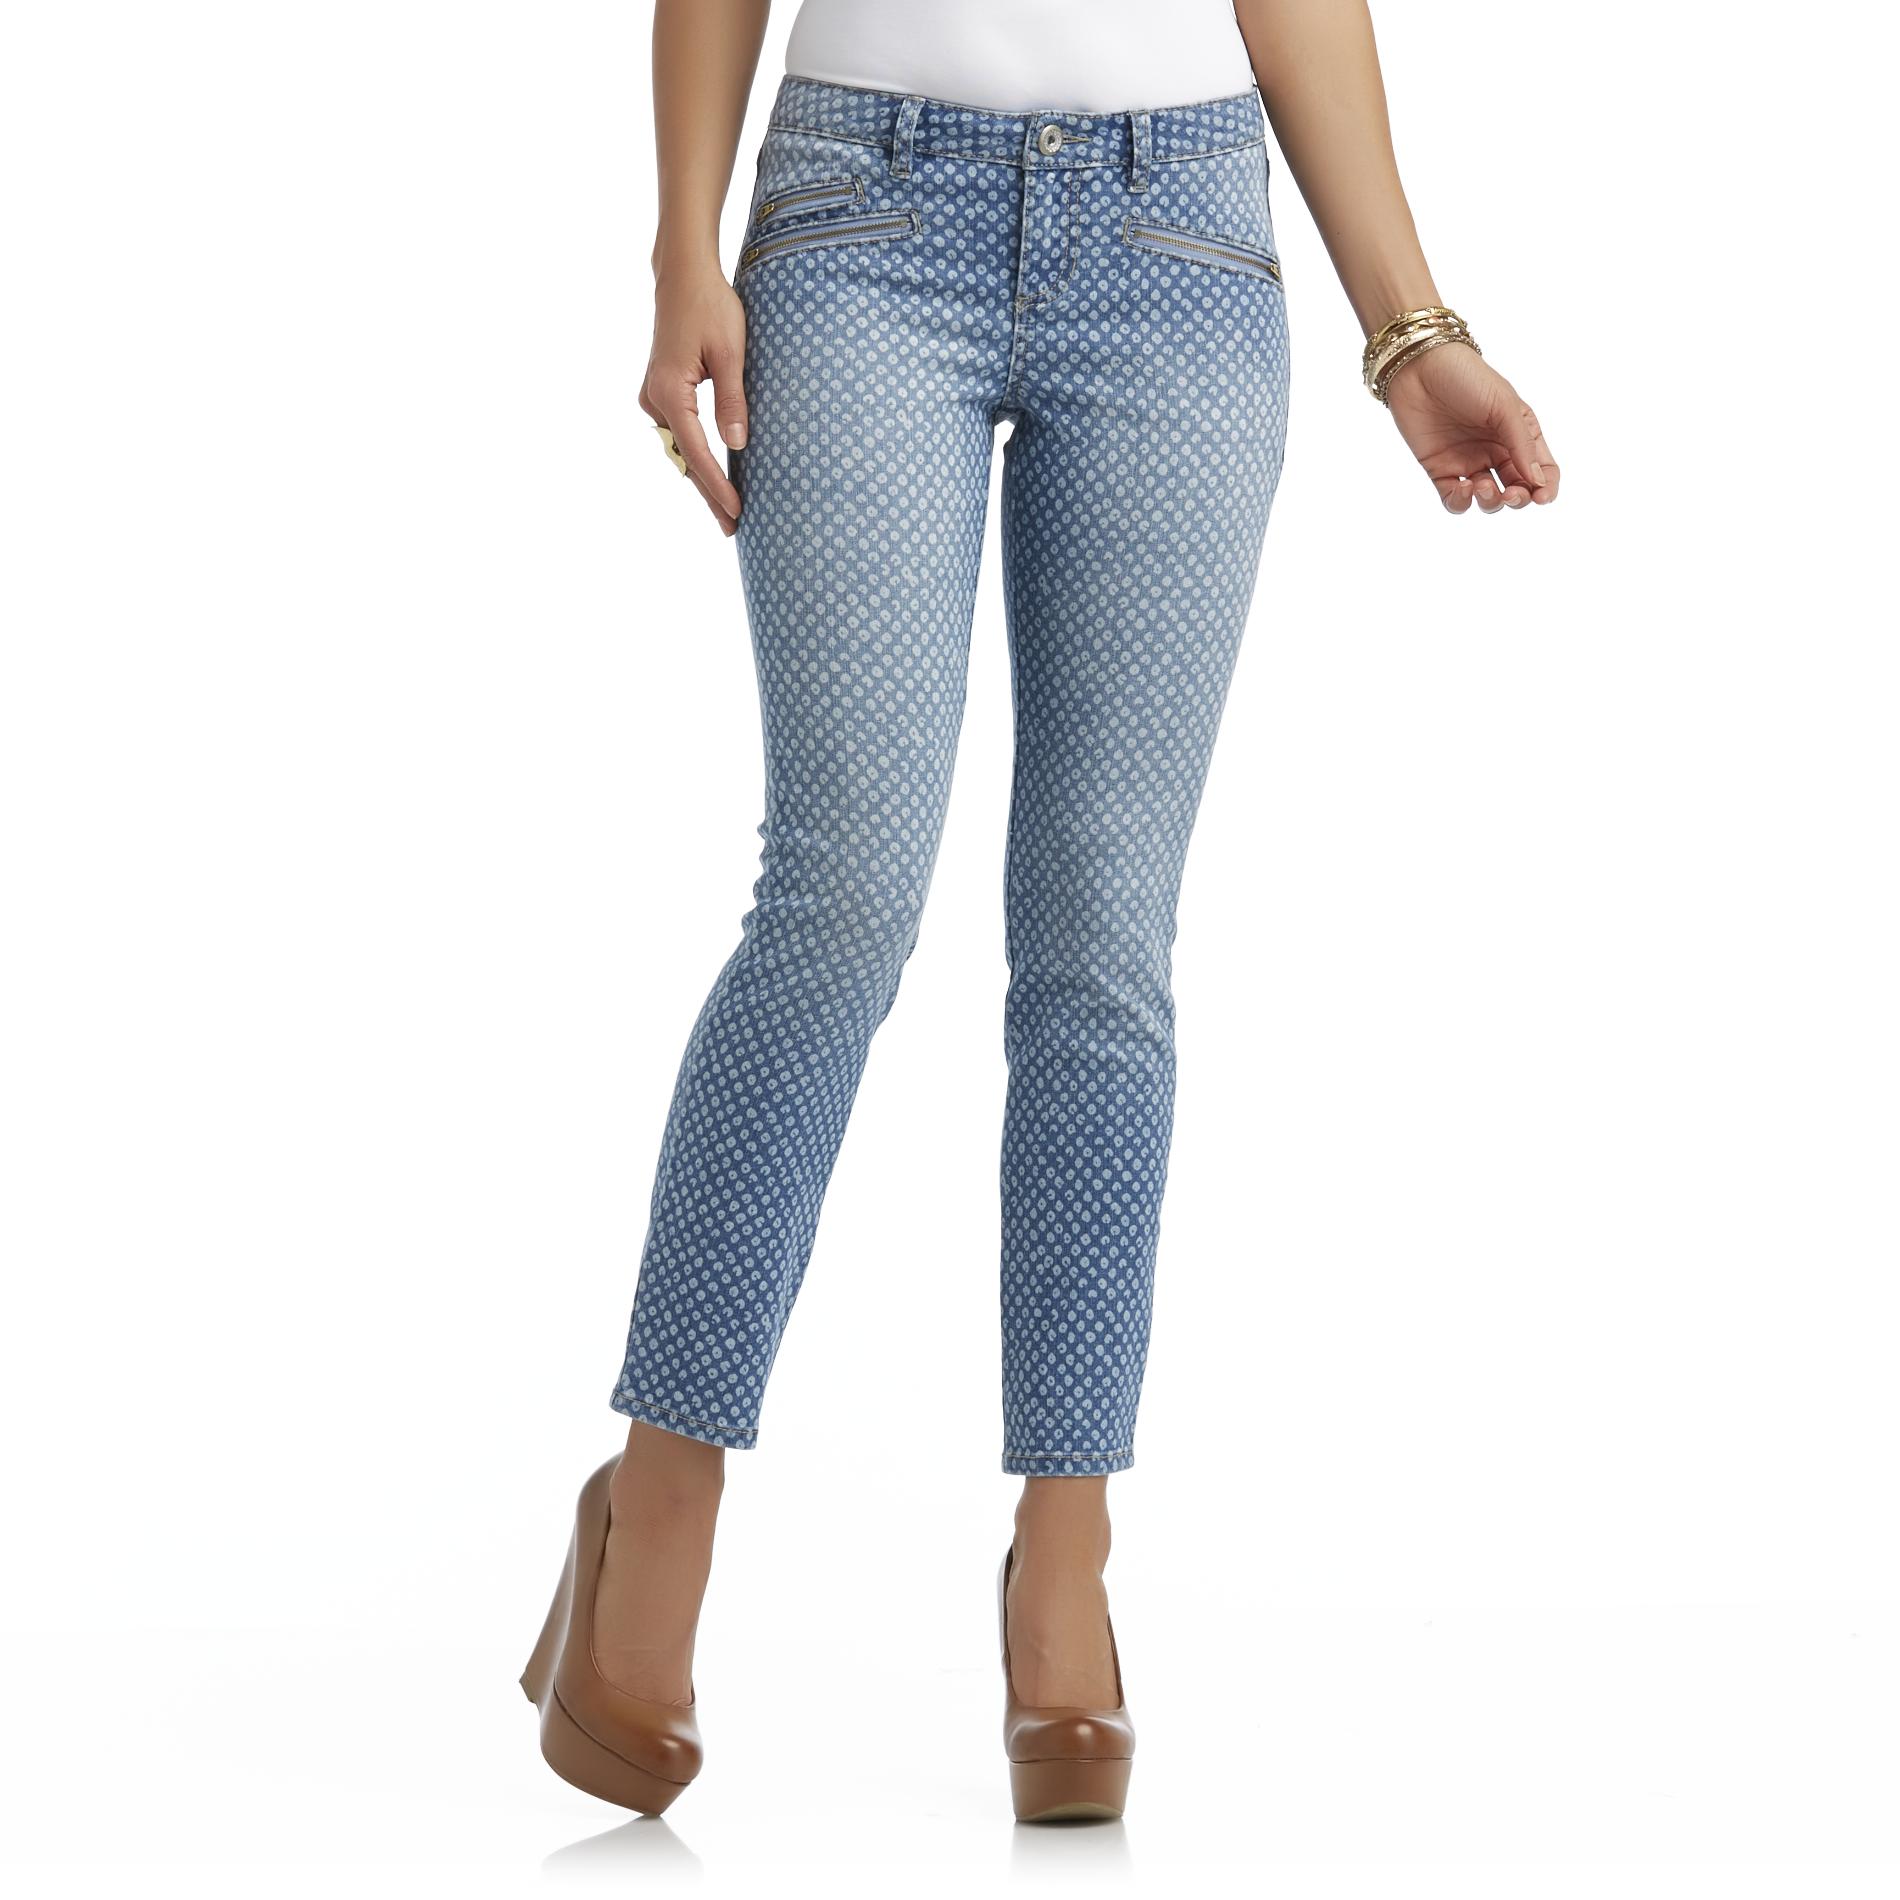 Route 66 Women's Skinny Jeans - Polka Dot